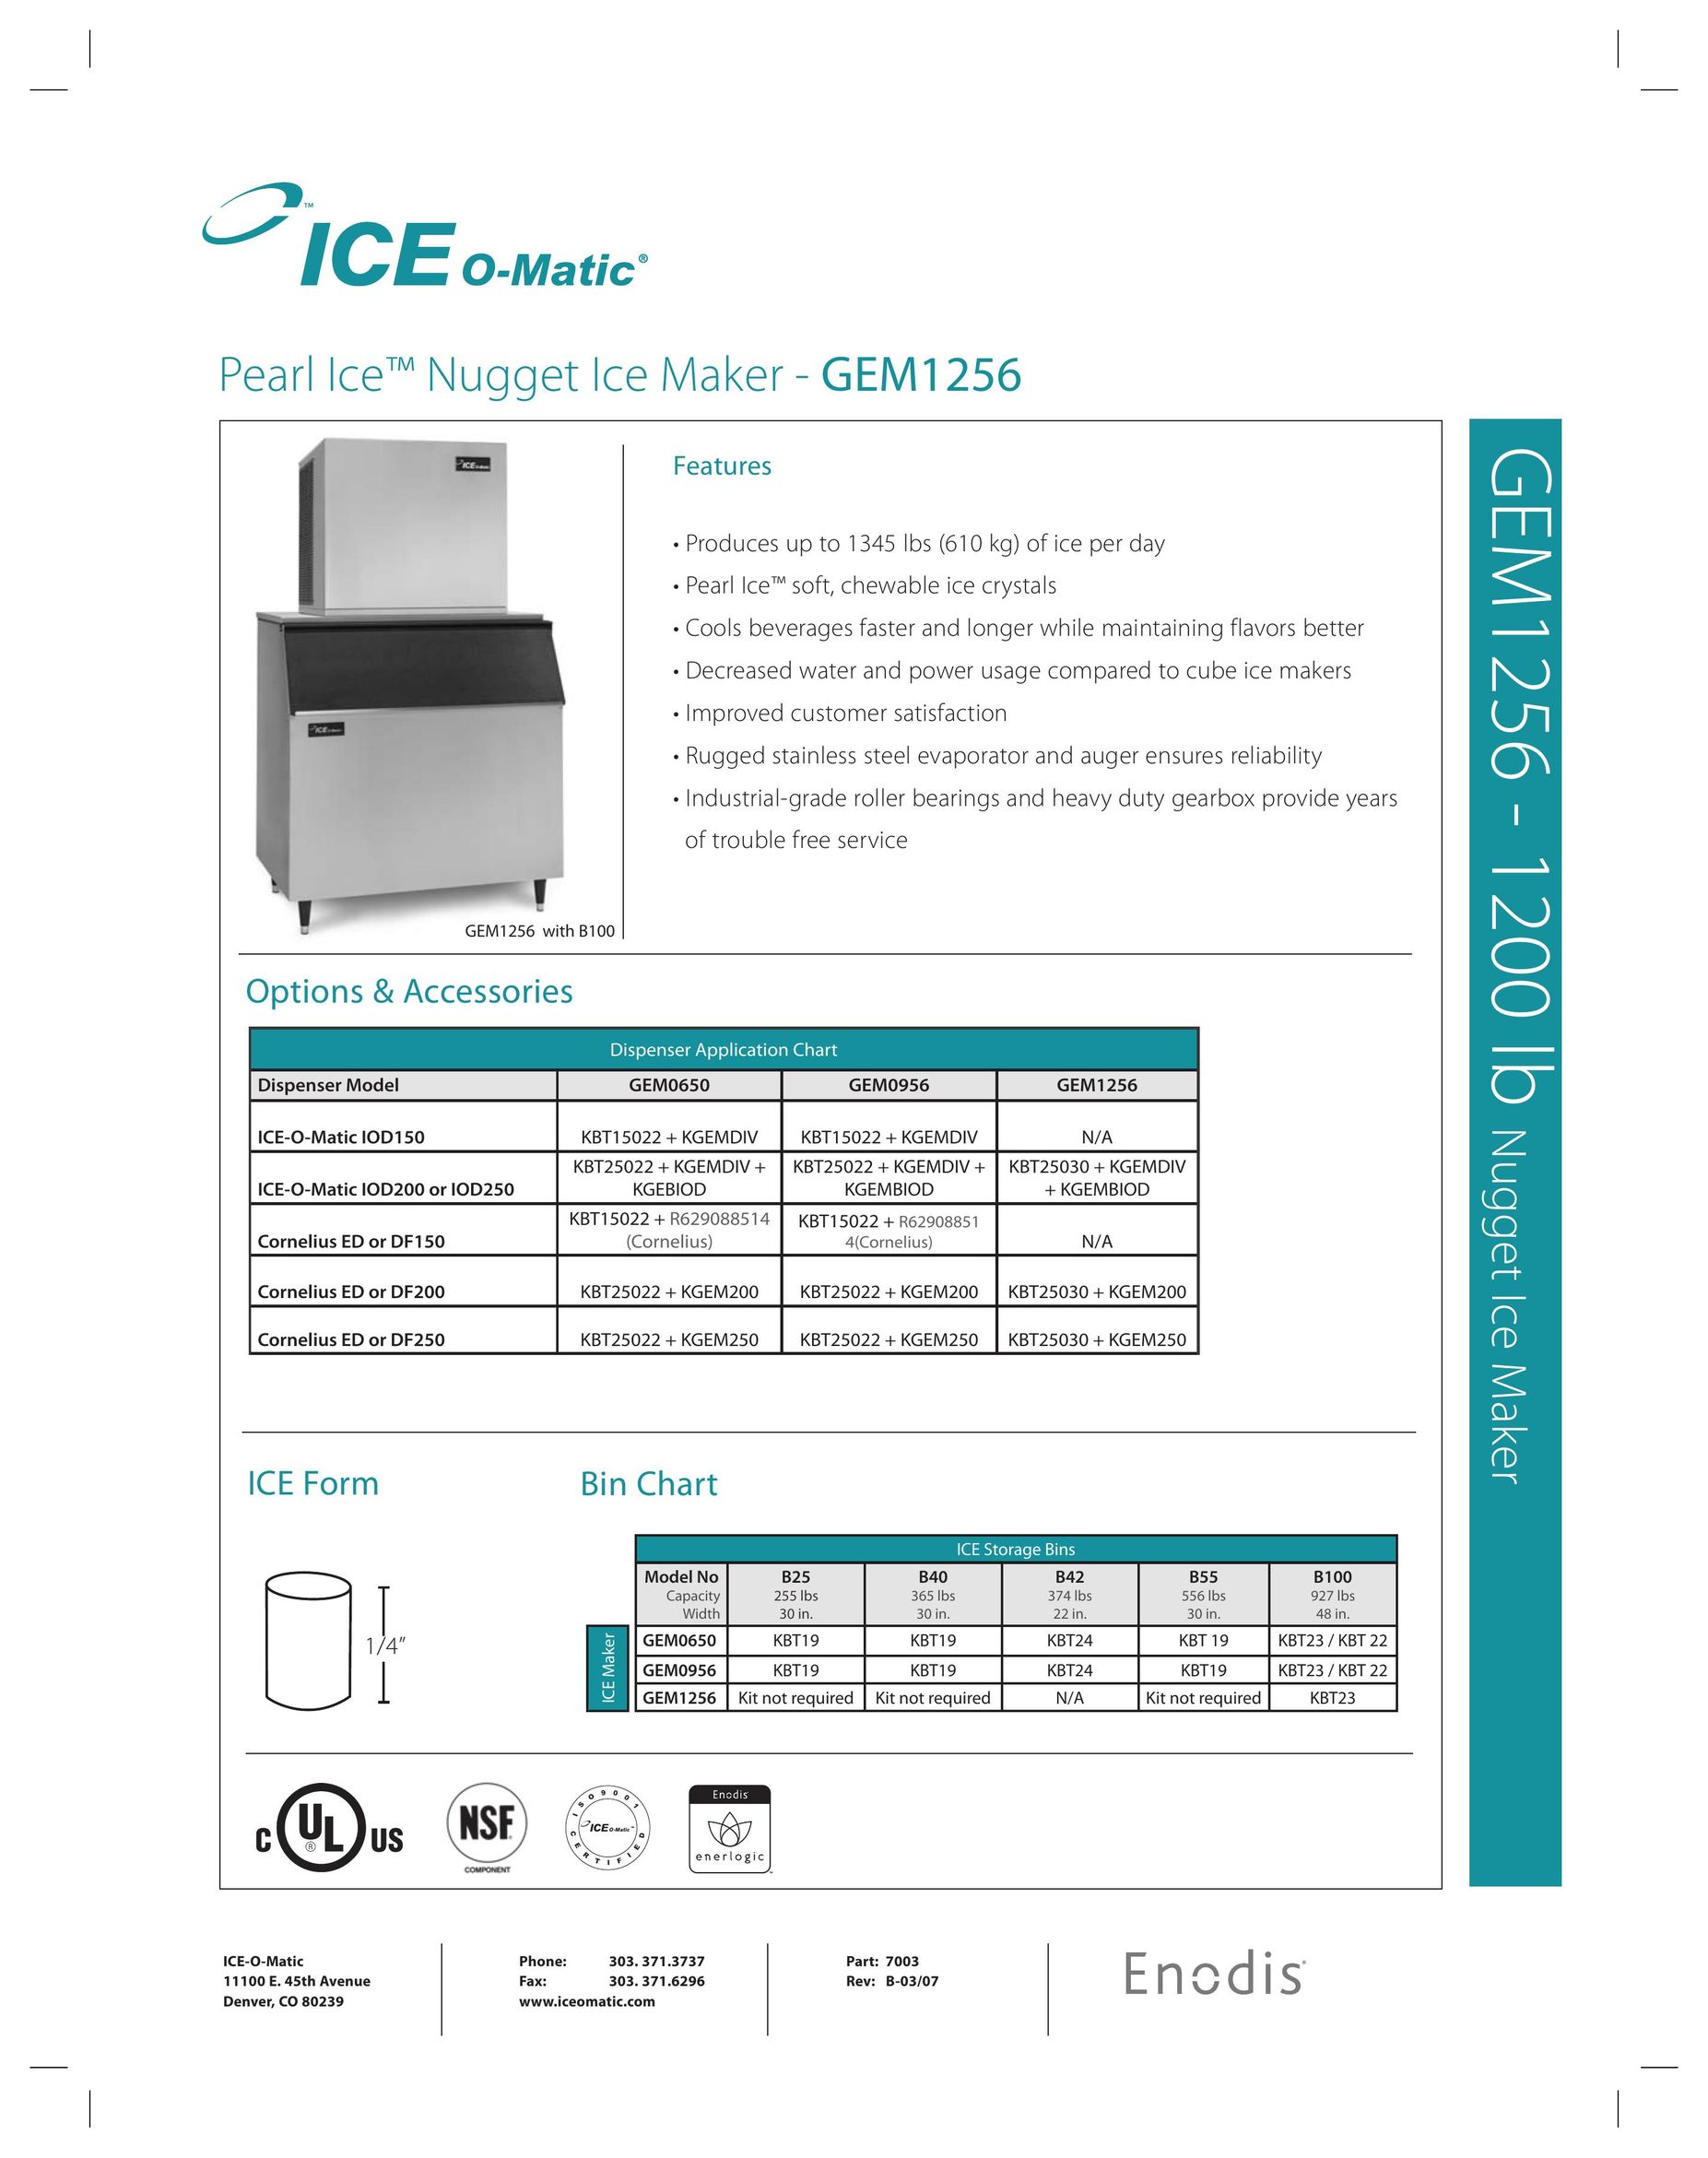 Ice-O-Matic GEM 1256 Ice Maker User Manual